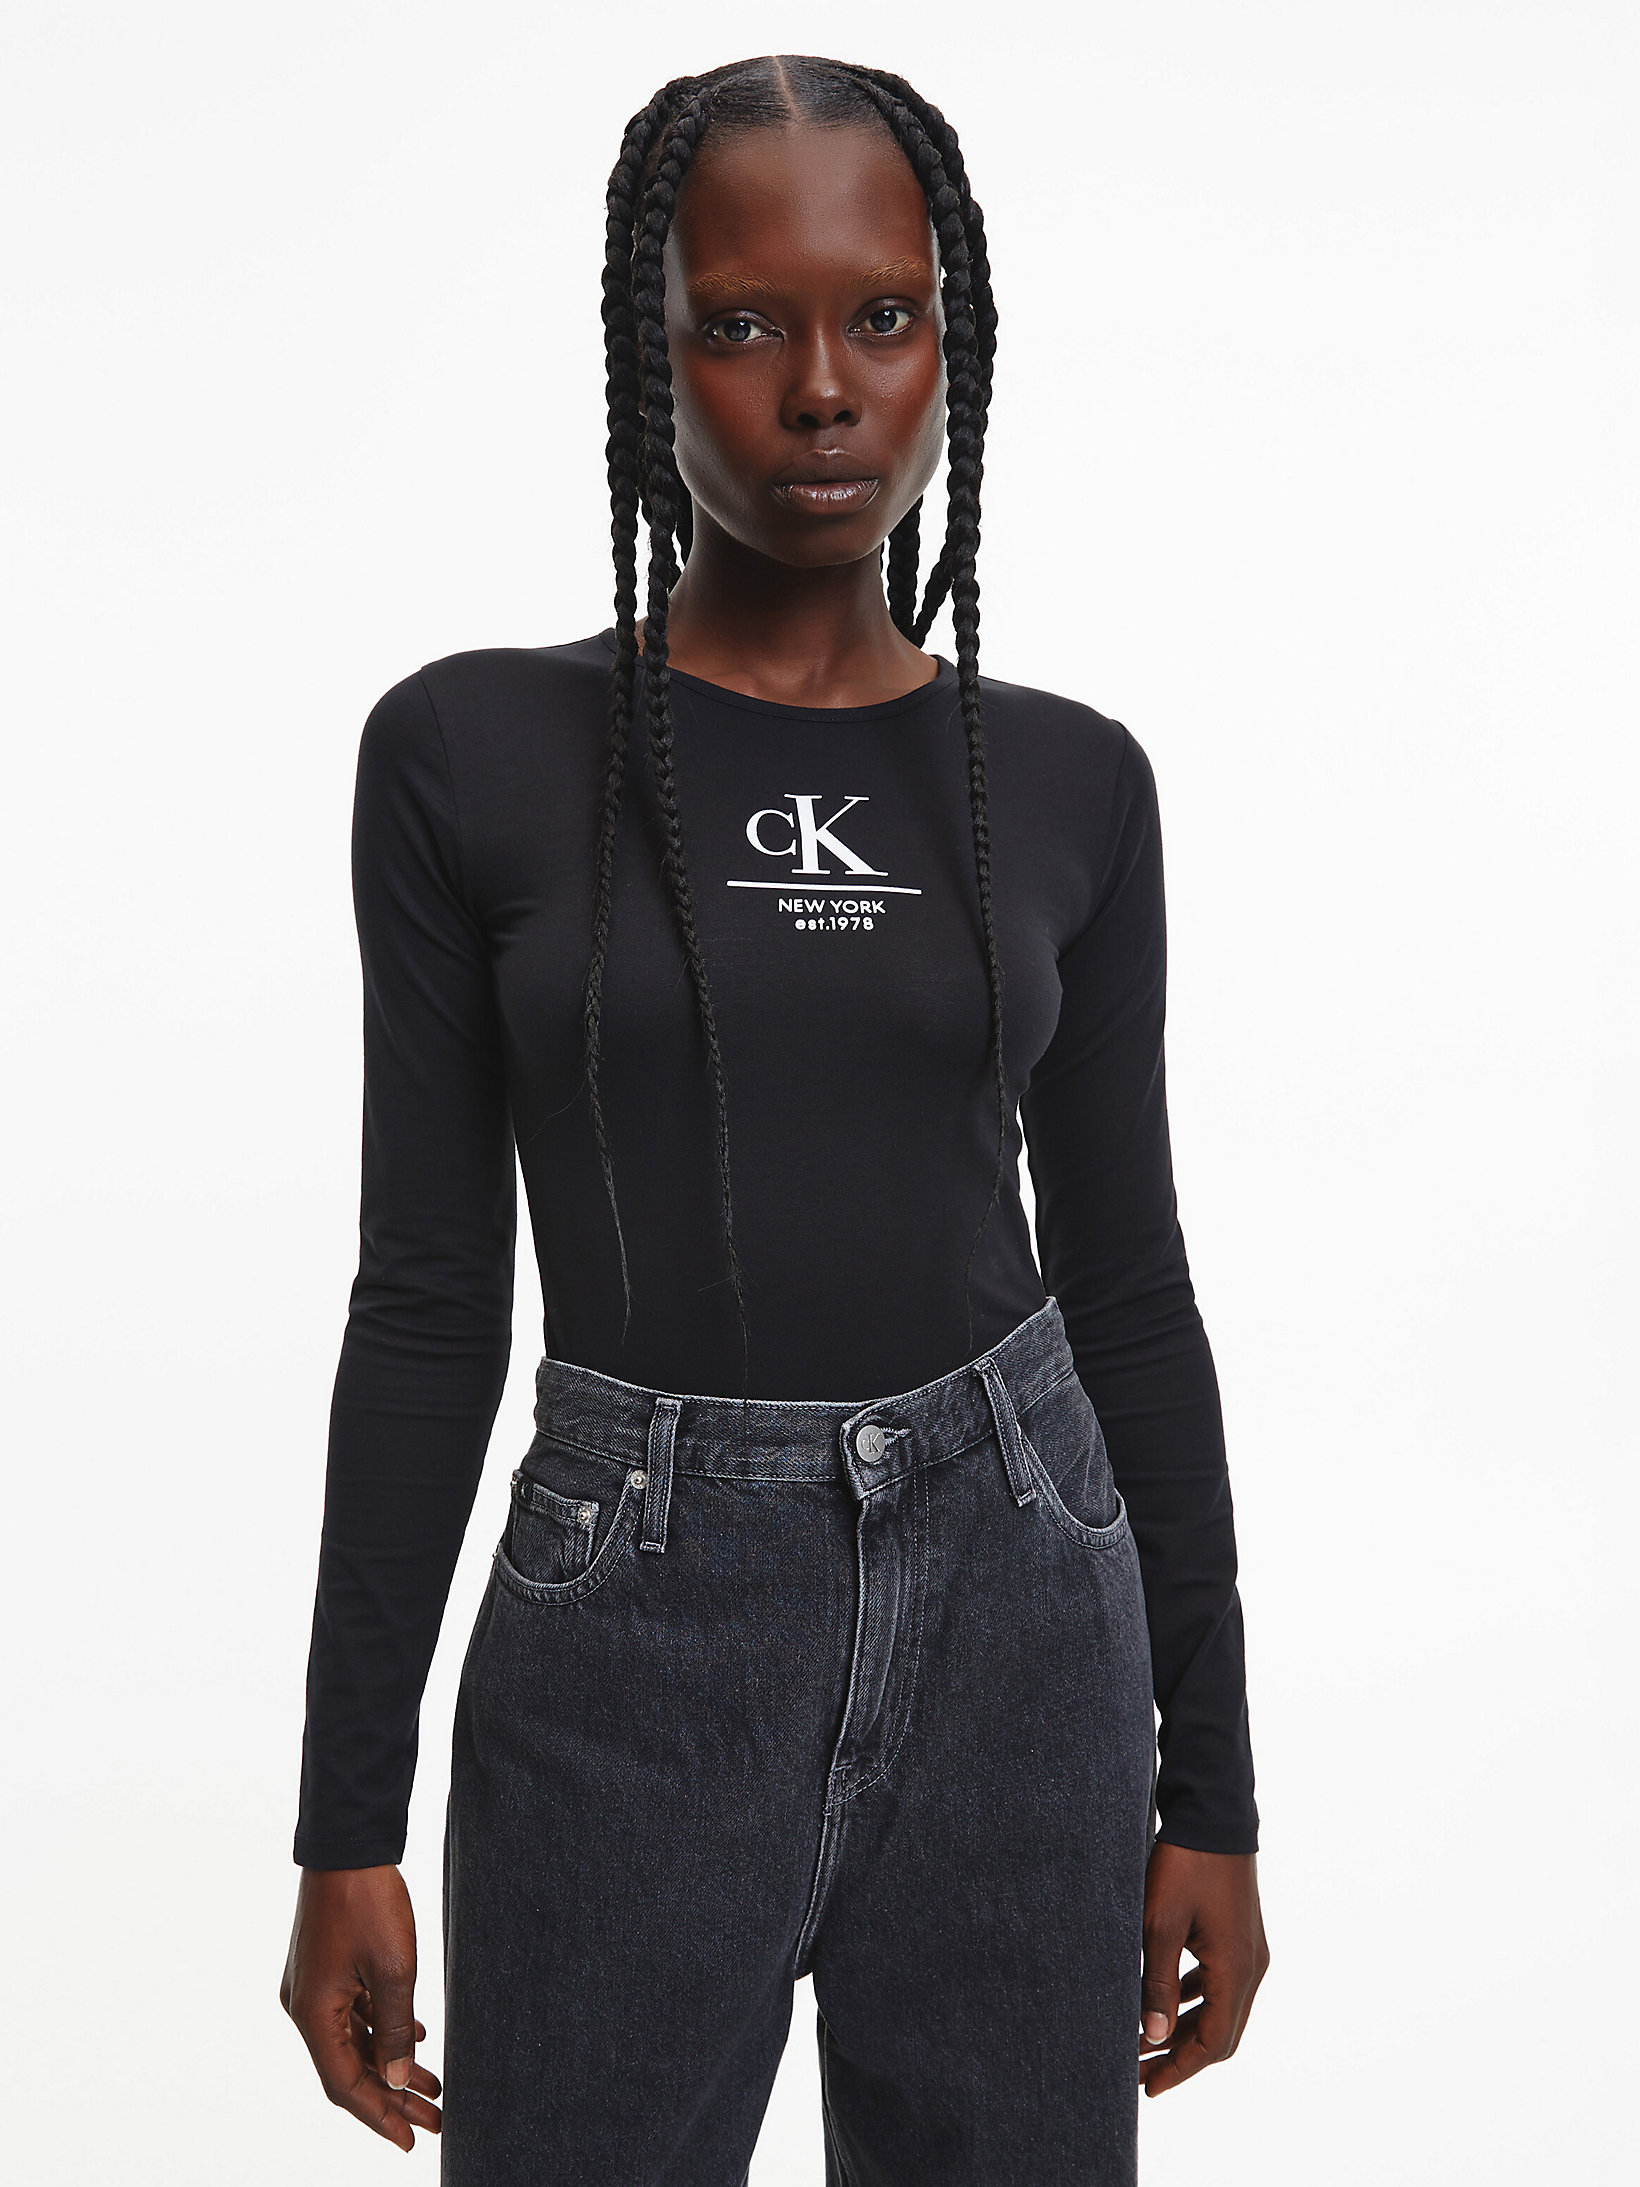 CK Black Long Sleeve Bodysuit undefined women Calvin Klein